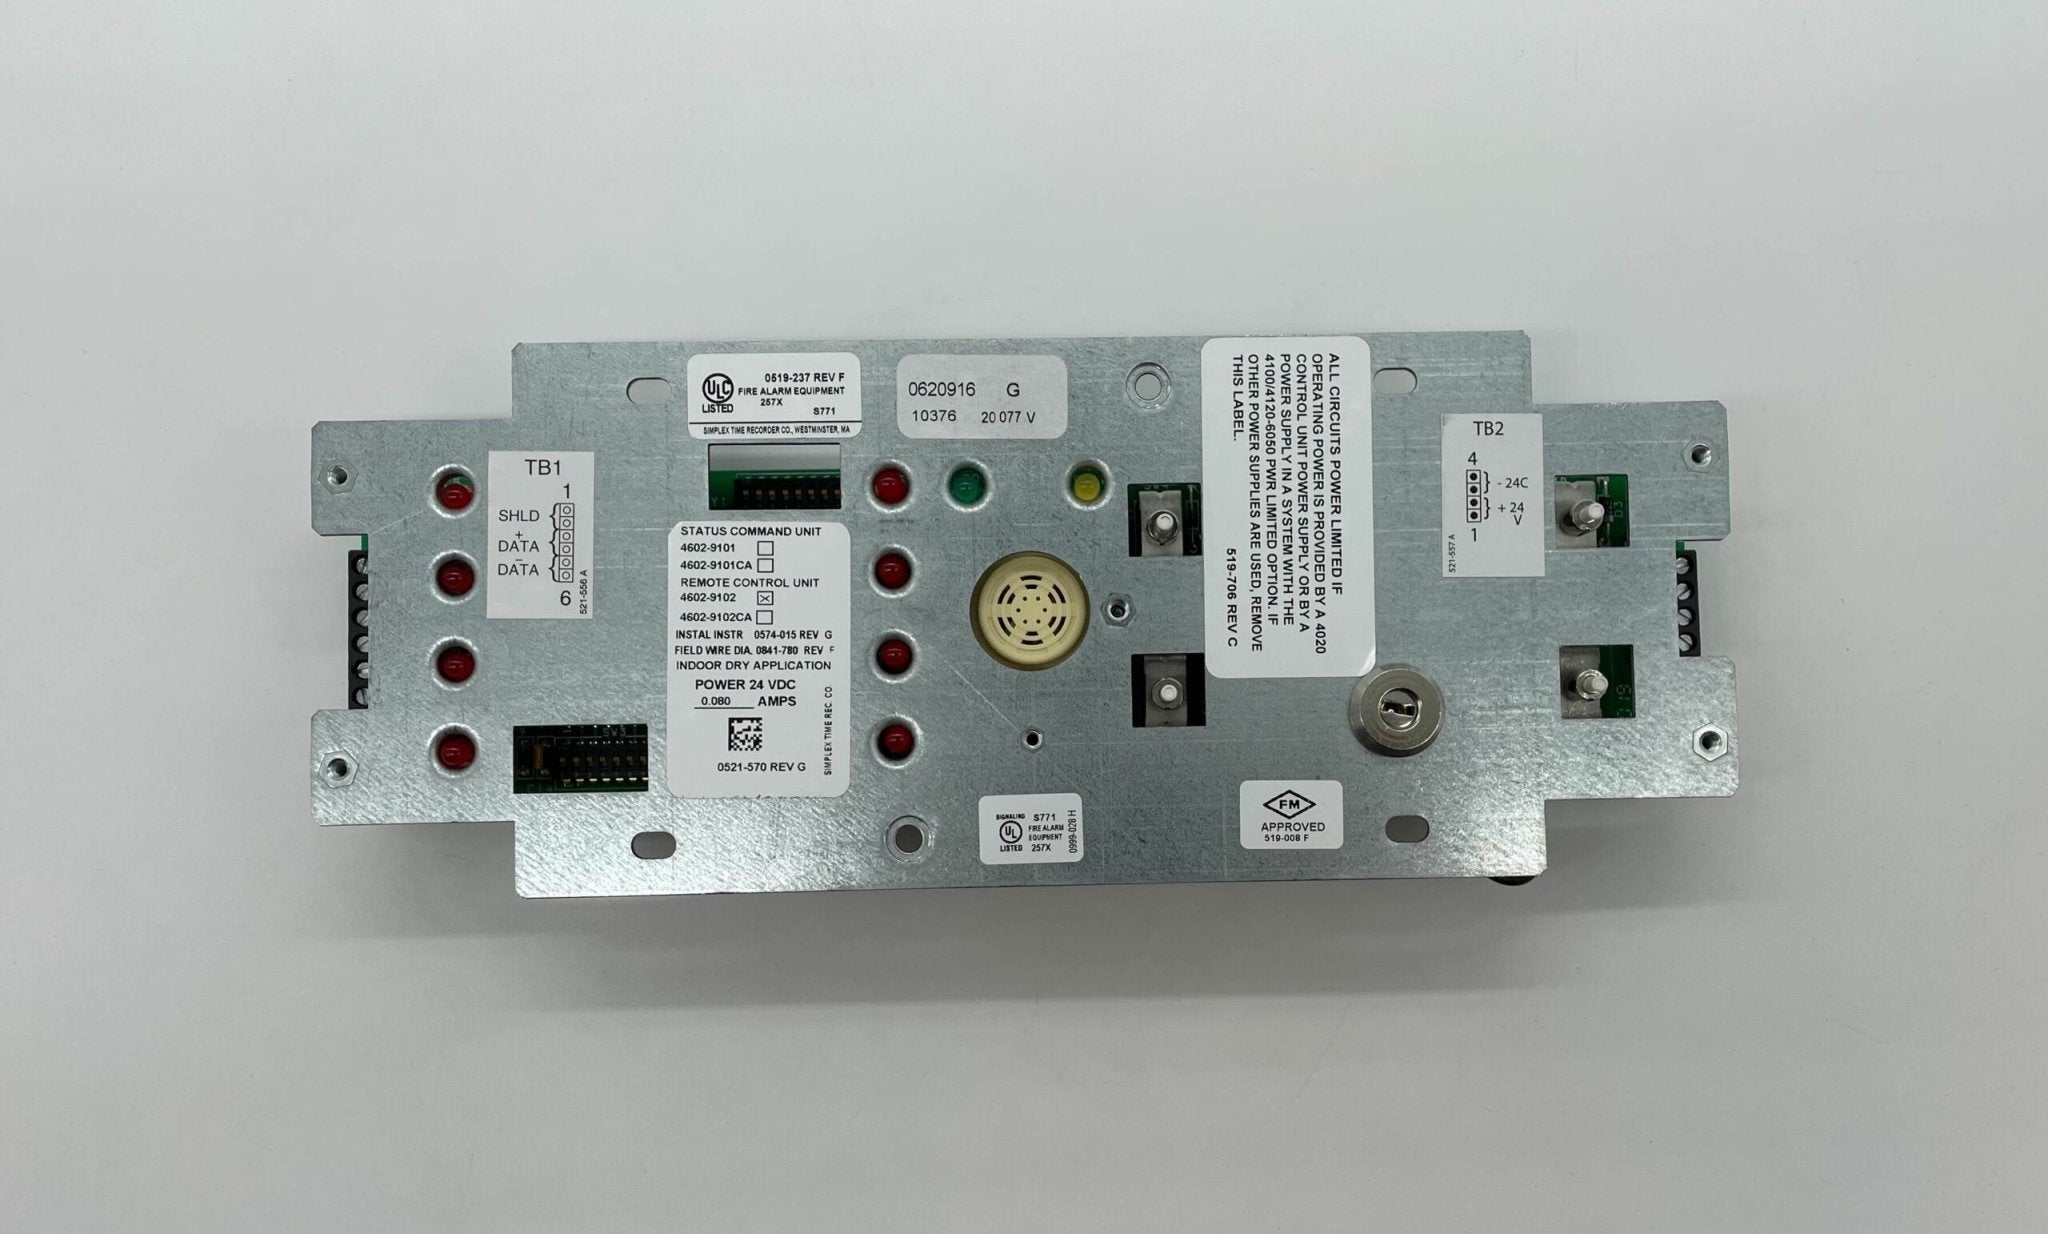 Simplex 4602-9102 Serial Annunciator - The Fire Alarm Supplier